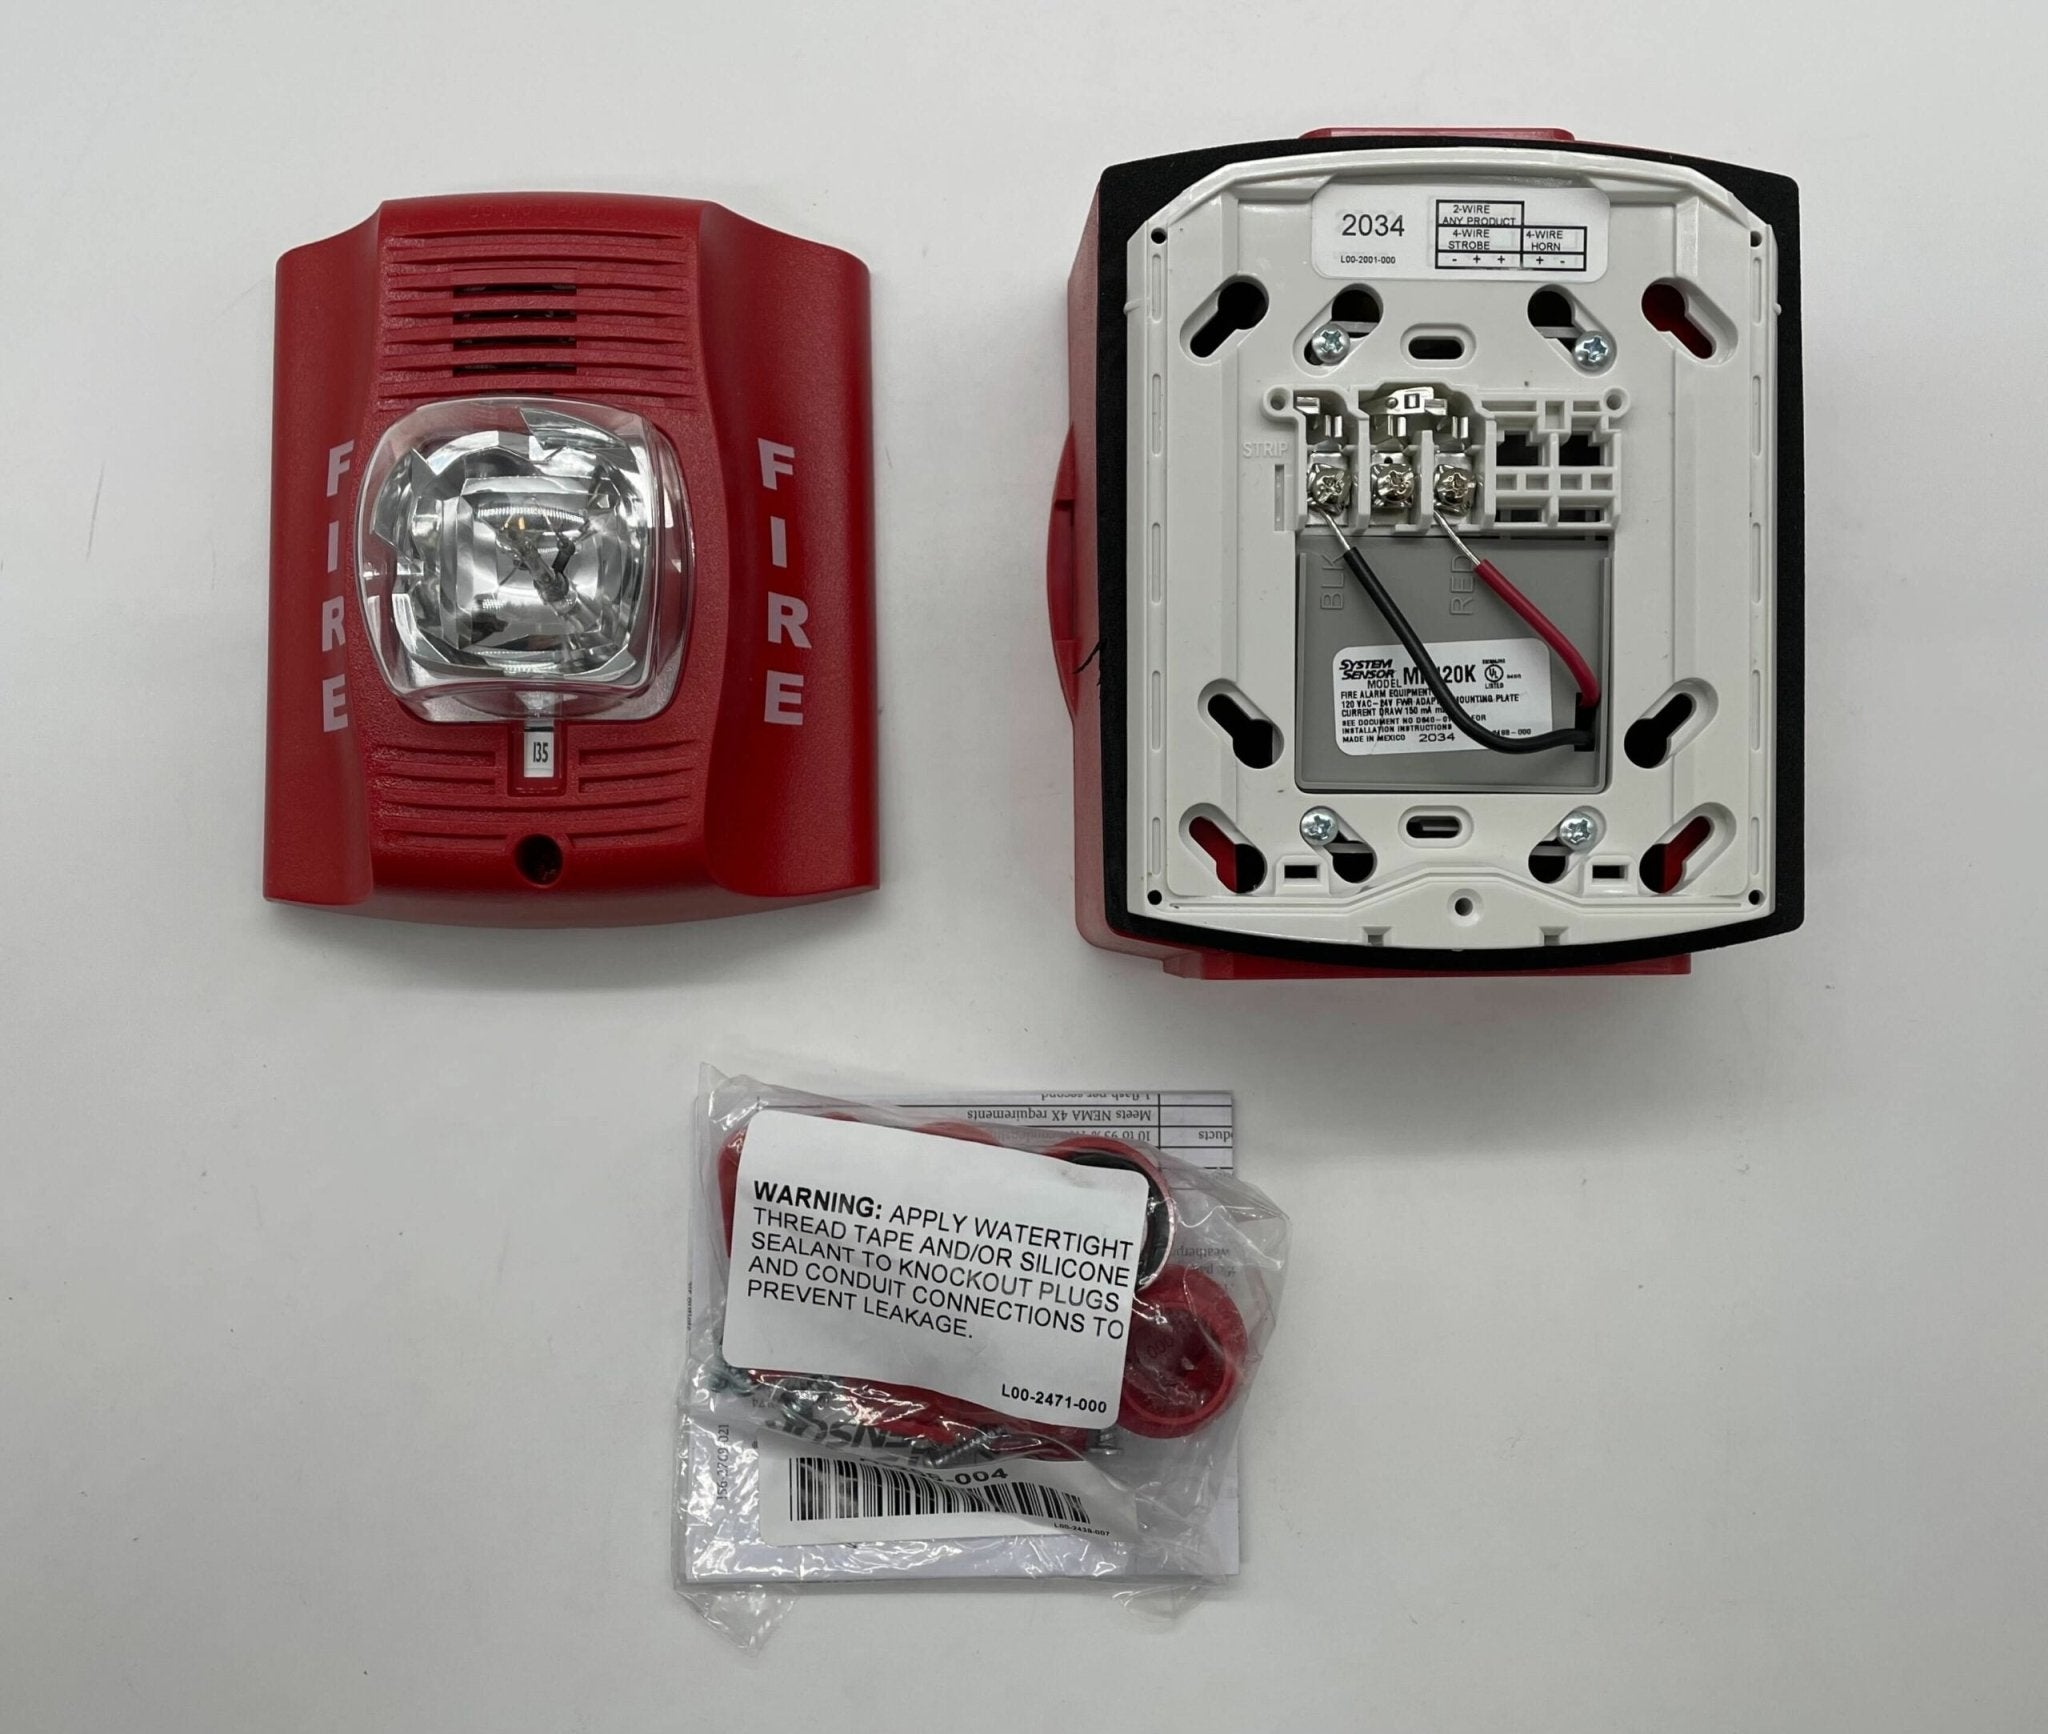 System Sensor P2RHK-120 - The Fire Alarm Supplier